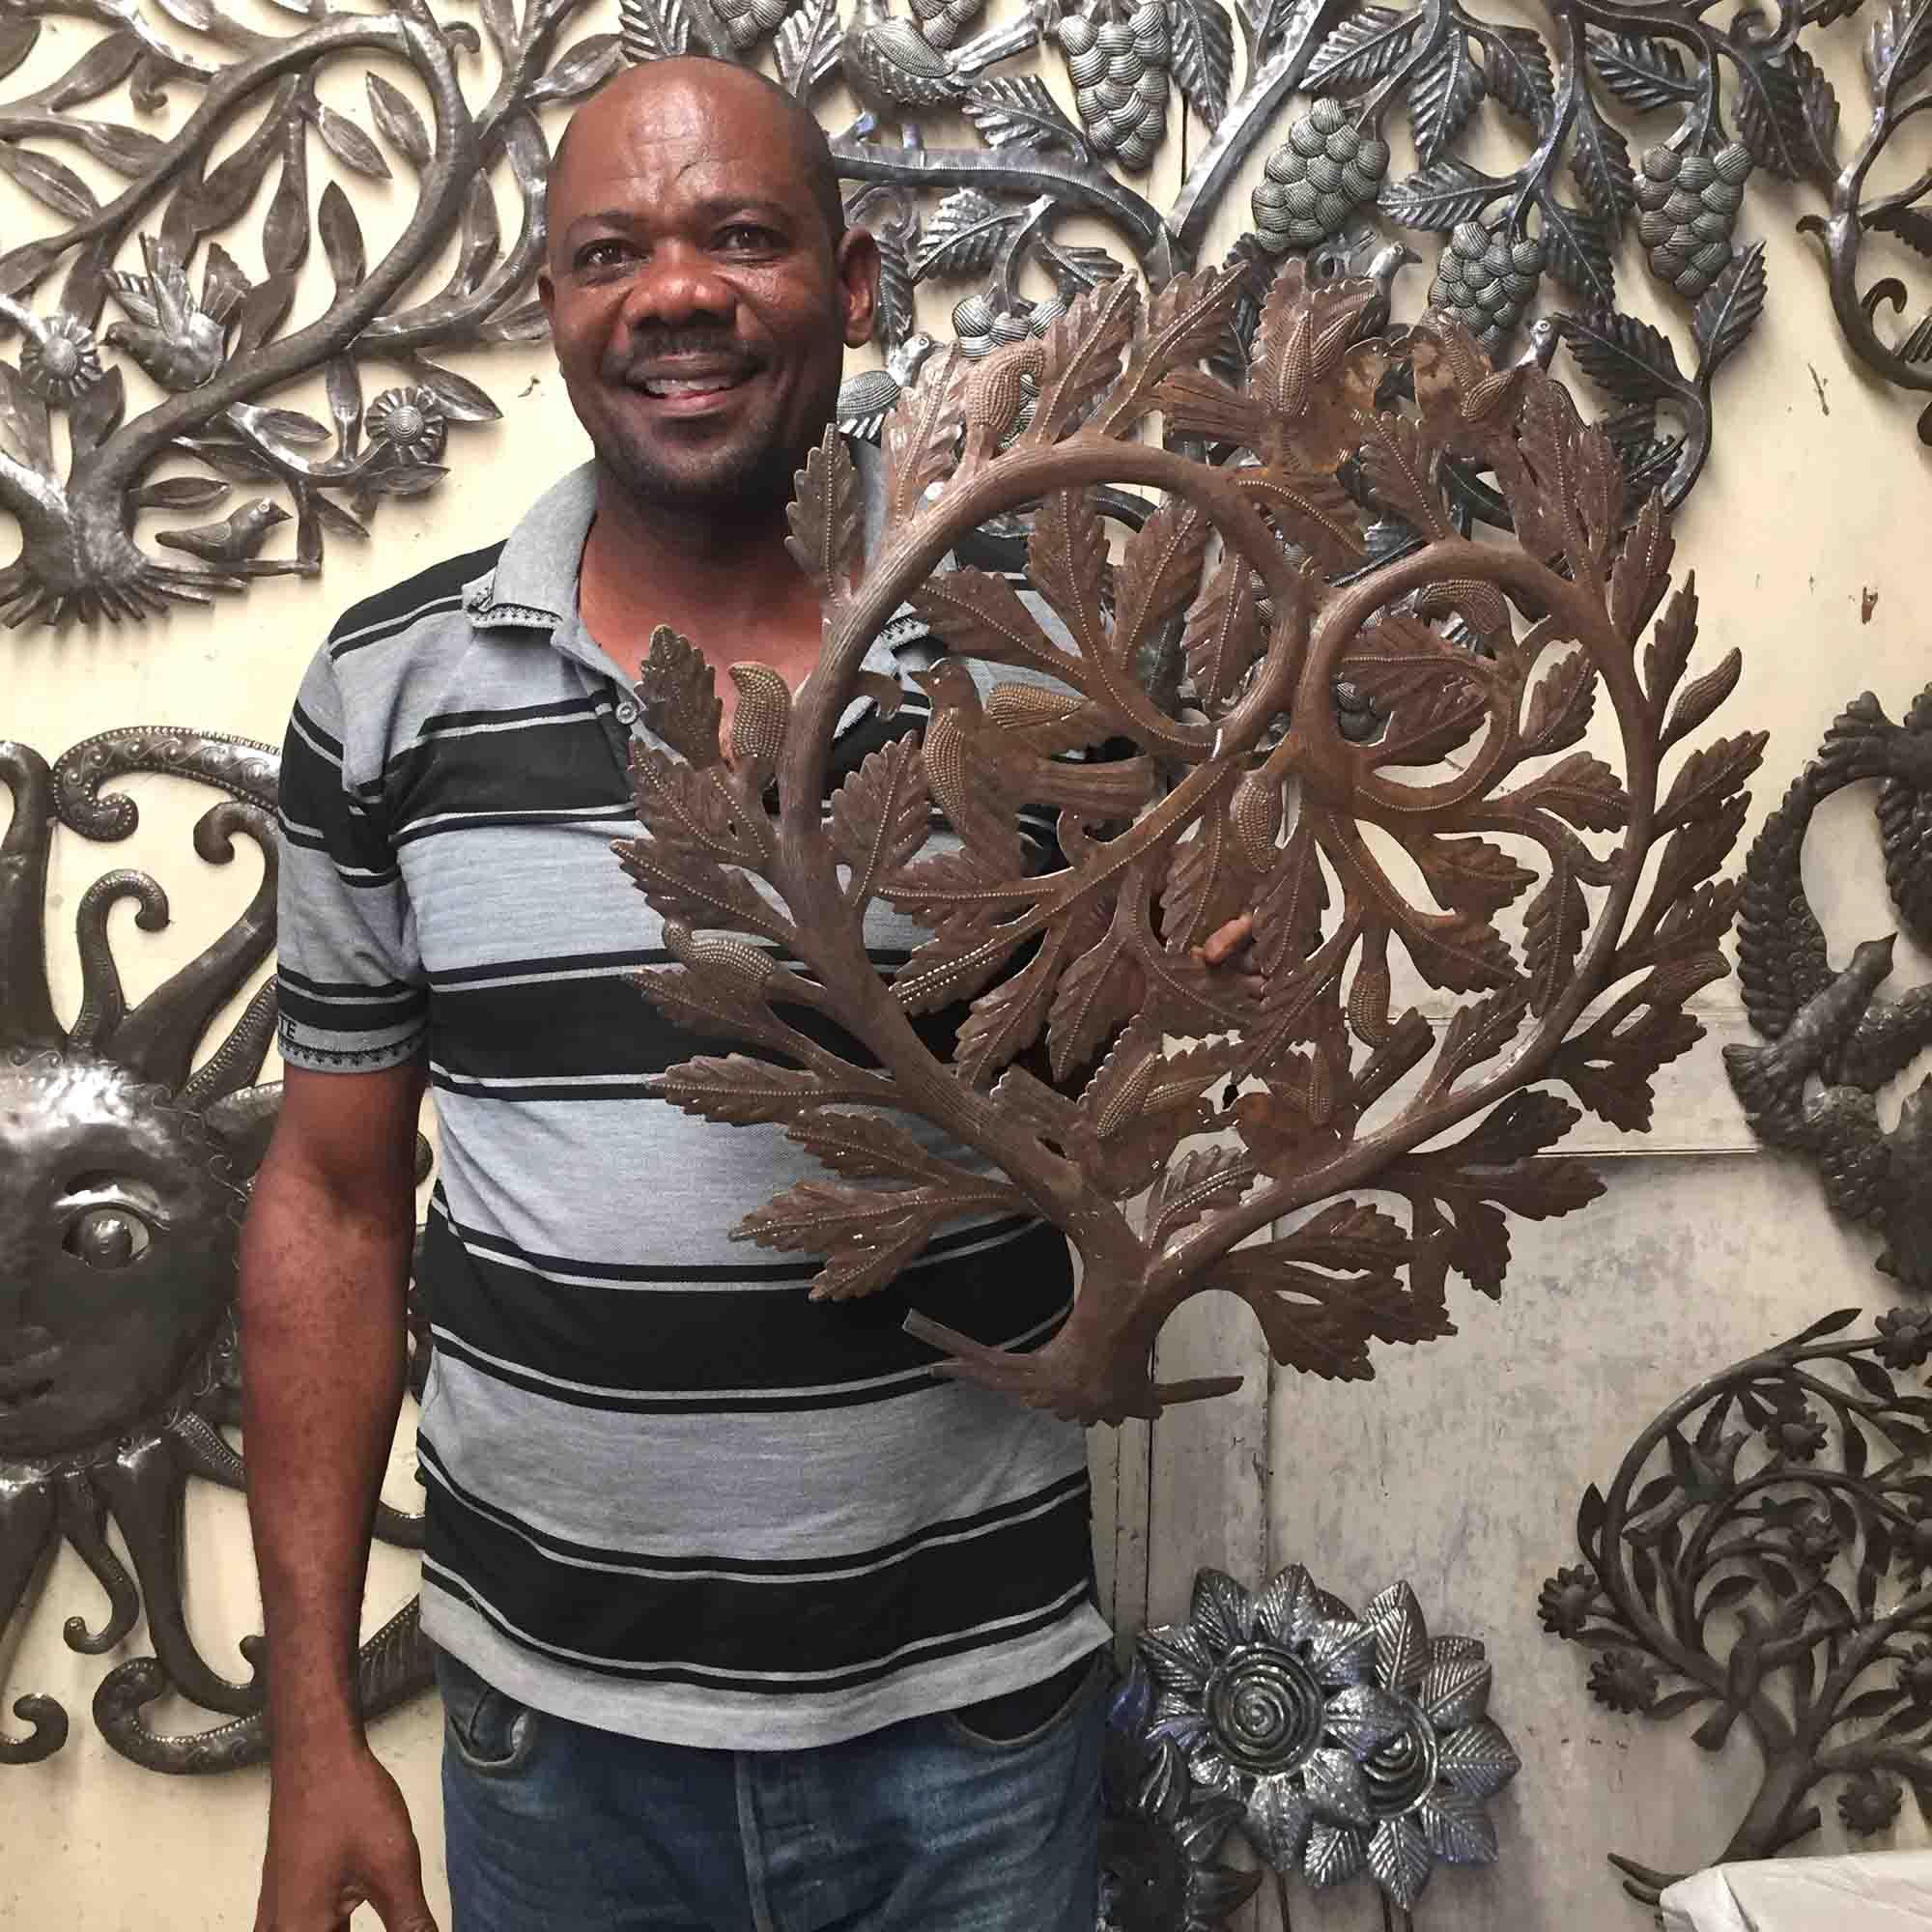 Cardinal on Branch, Painted Haitian Steel Drum Wall Art - Flyclothing LLC